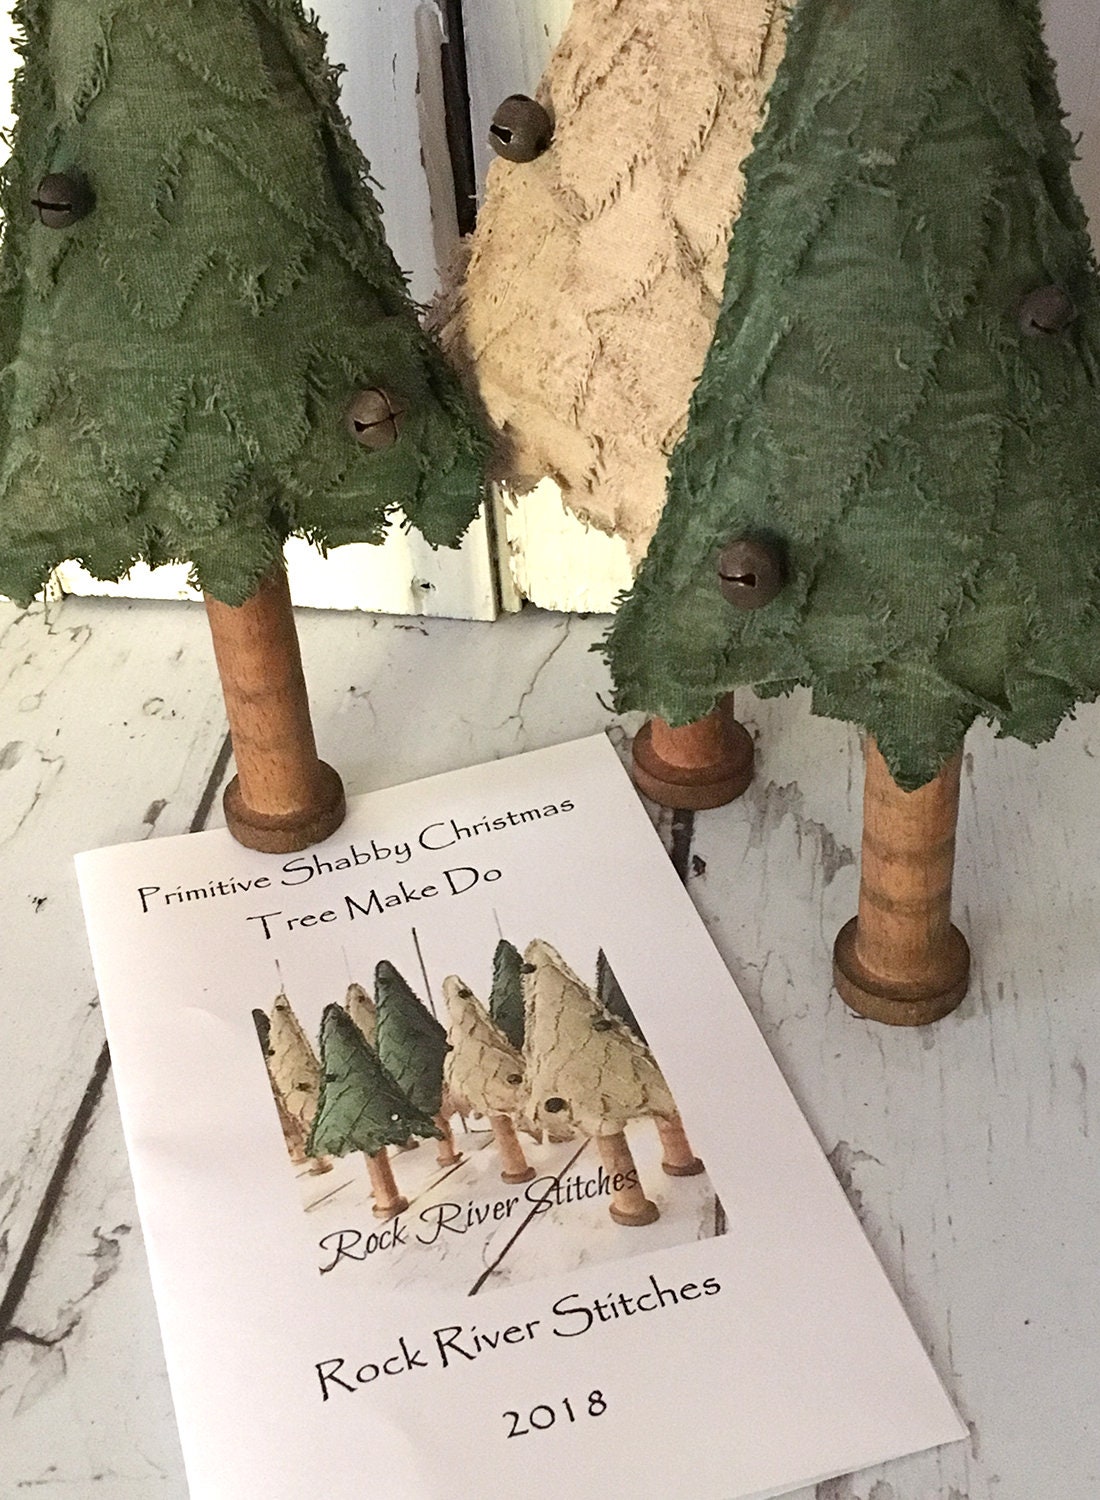 DIY Fabric Snowman - The Shabby Tree